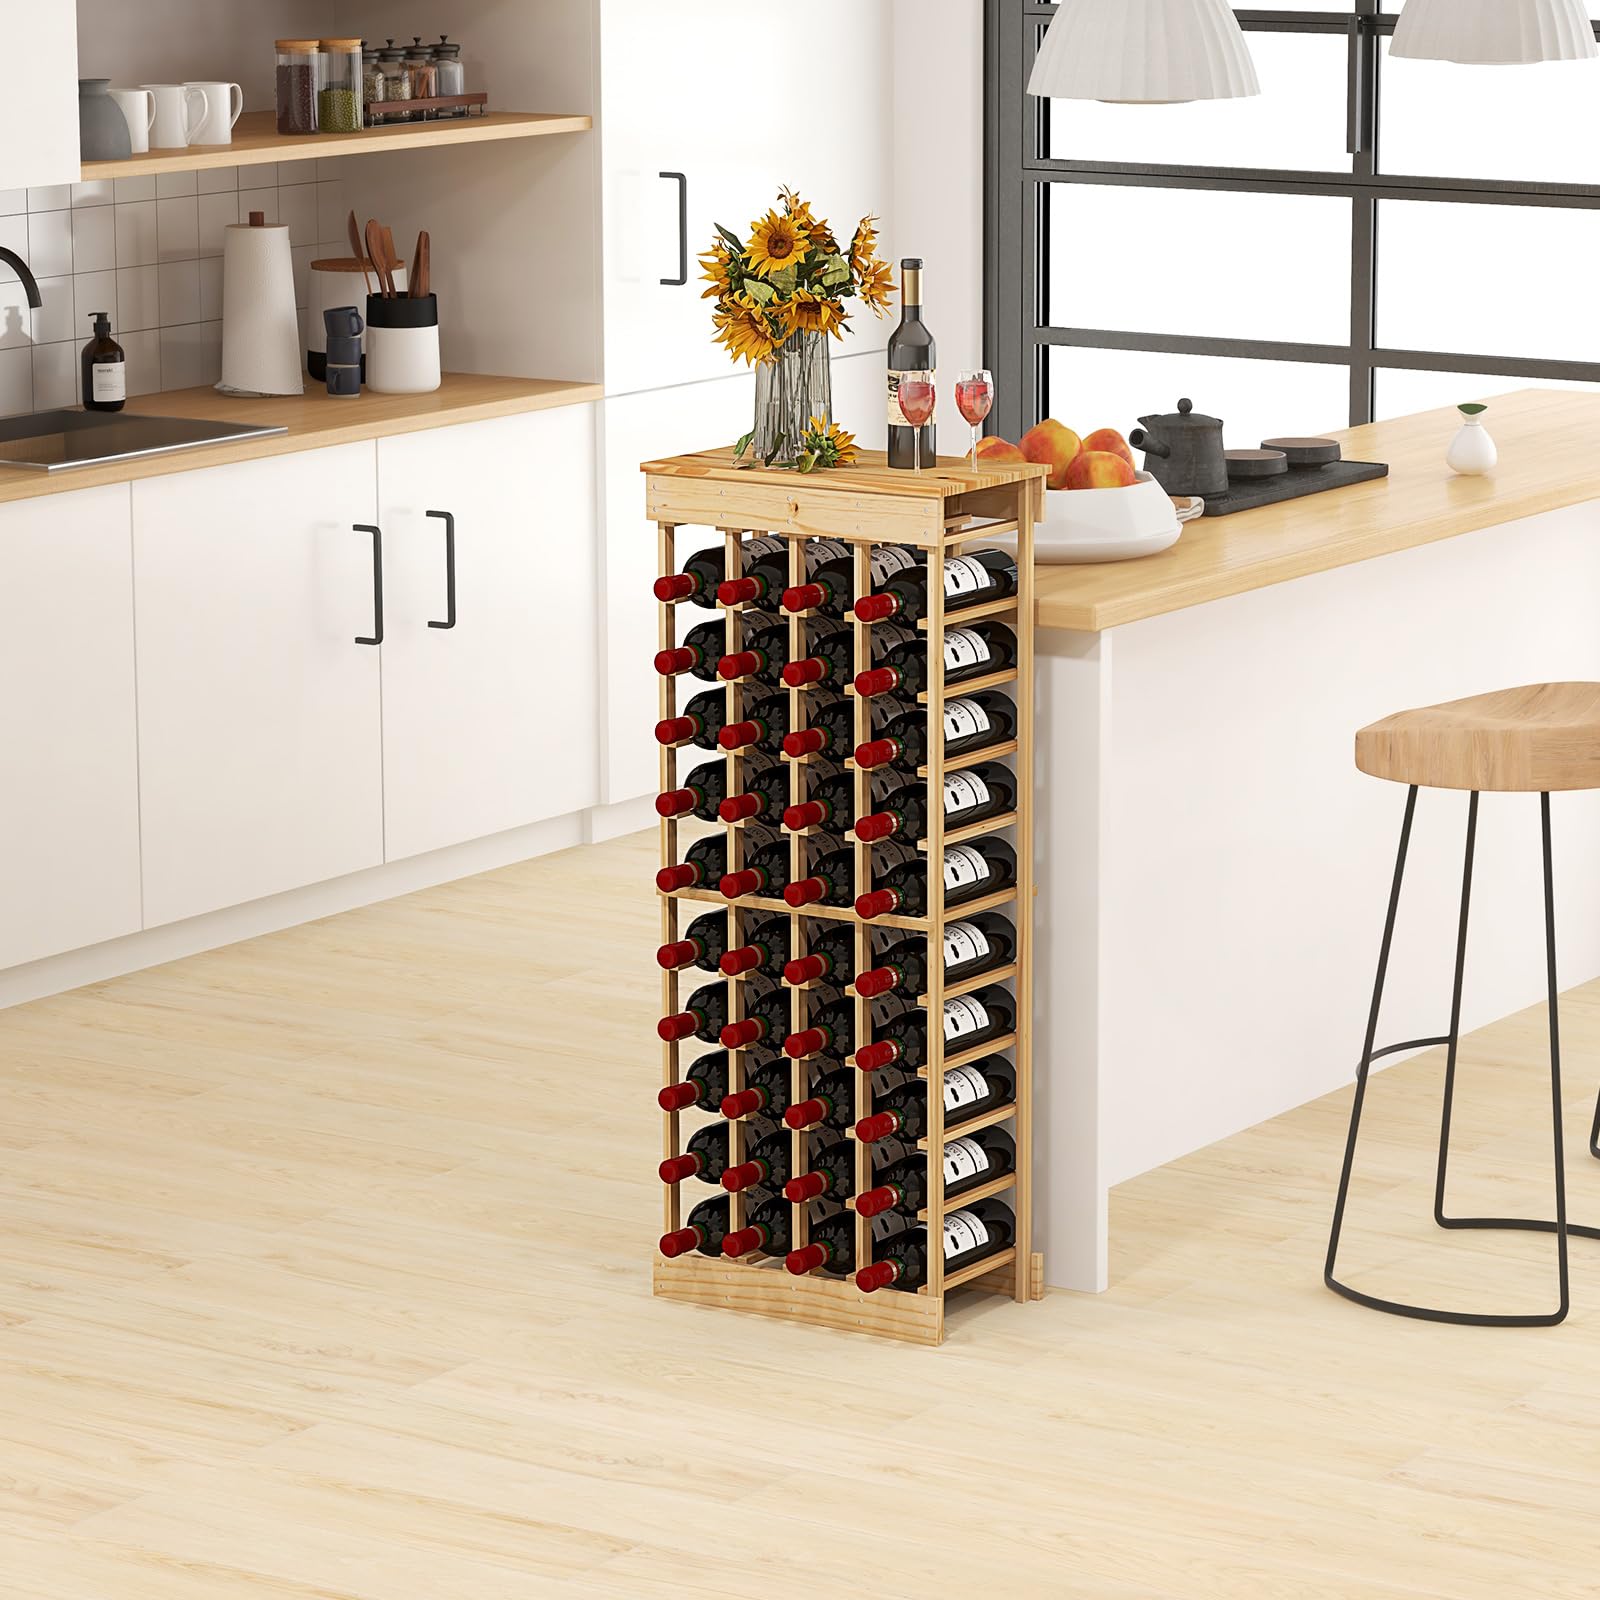 Giantex 40 Bottles Wine Rack, Solid Wood Modular Wine Bottle Holder with Anti-toppling Device & Reinforced Cross Bars